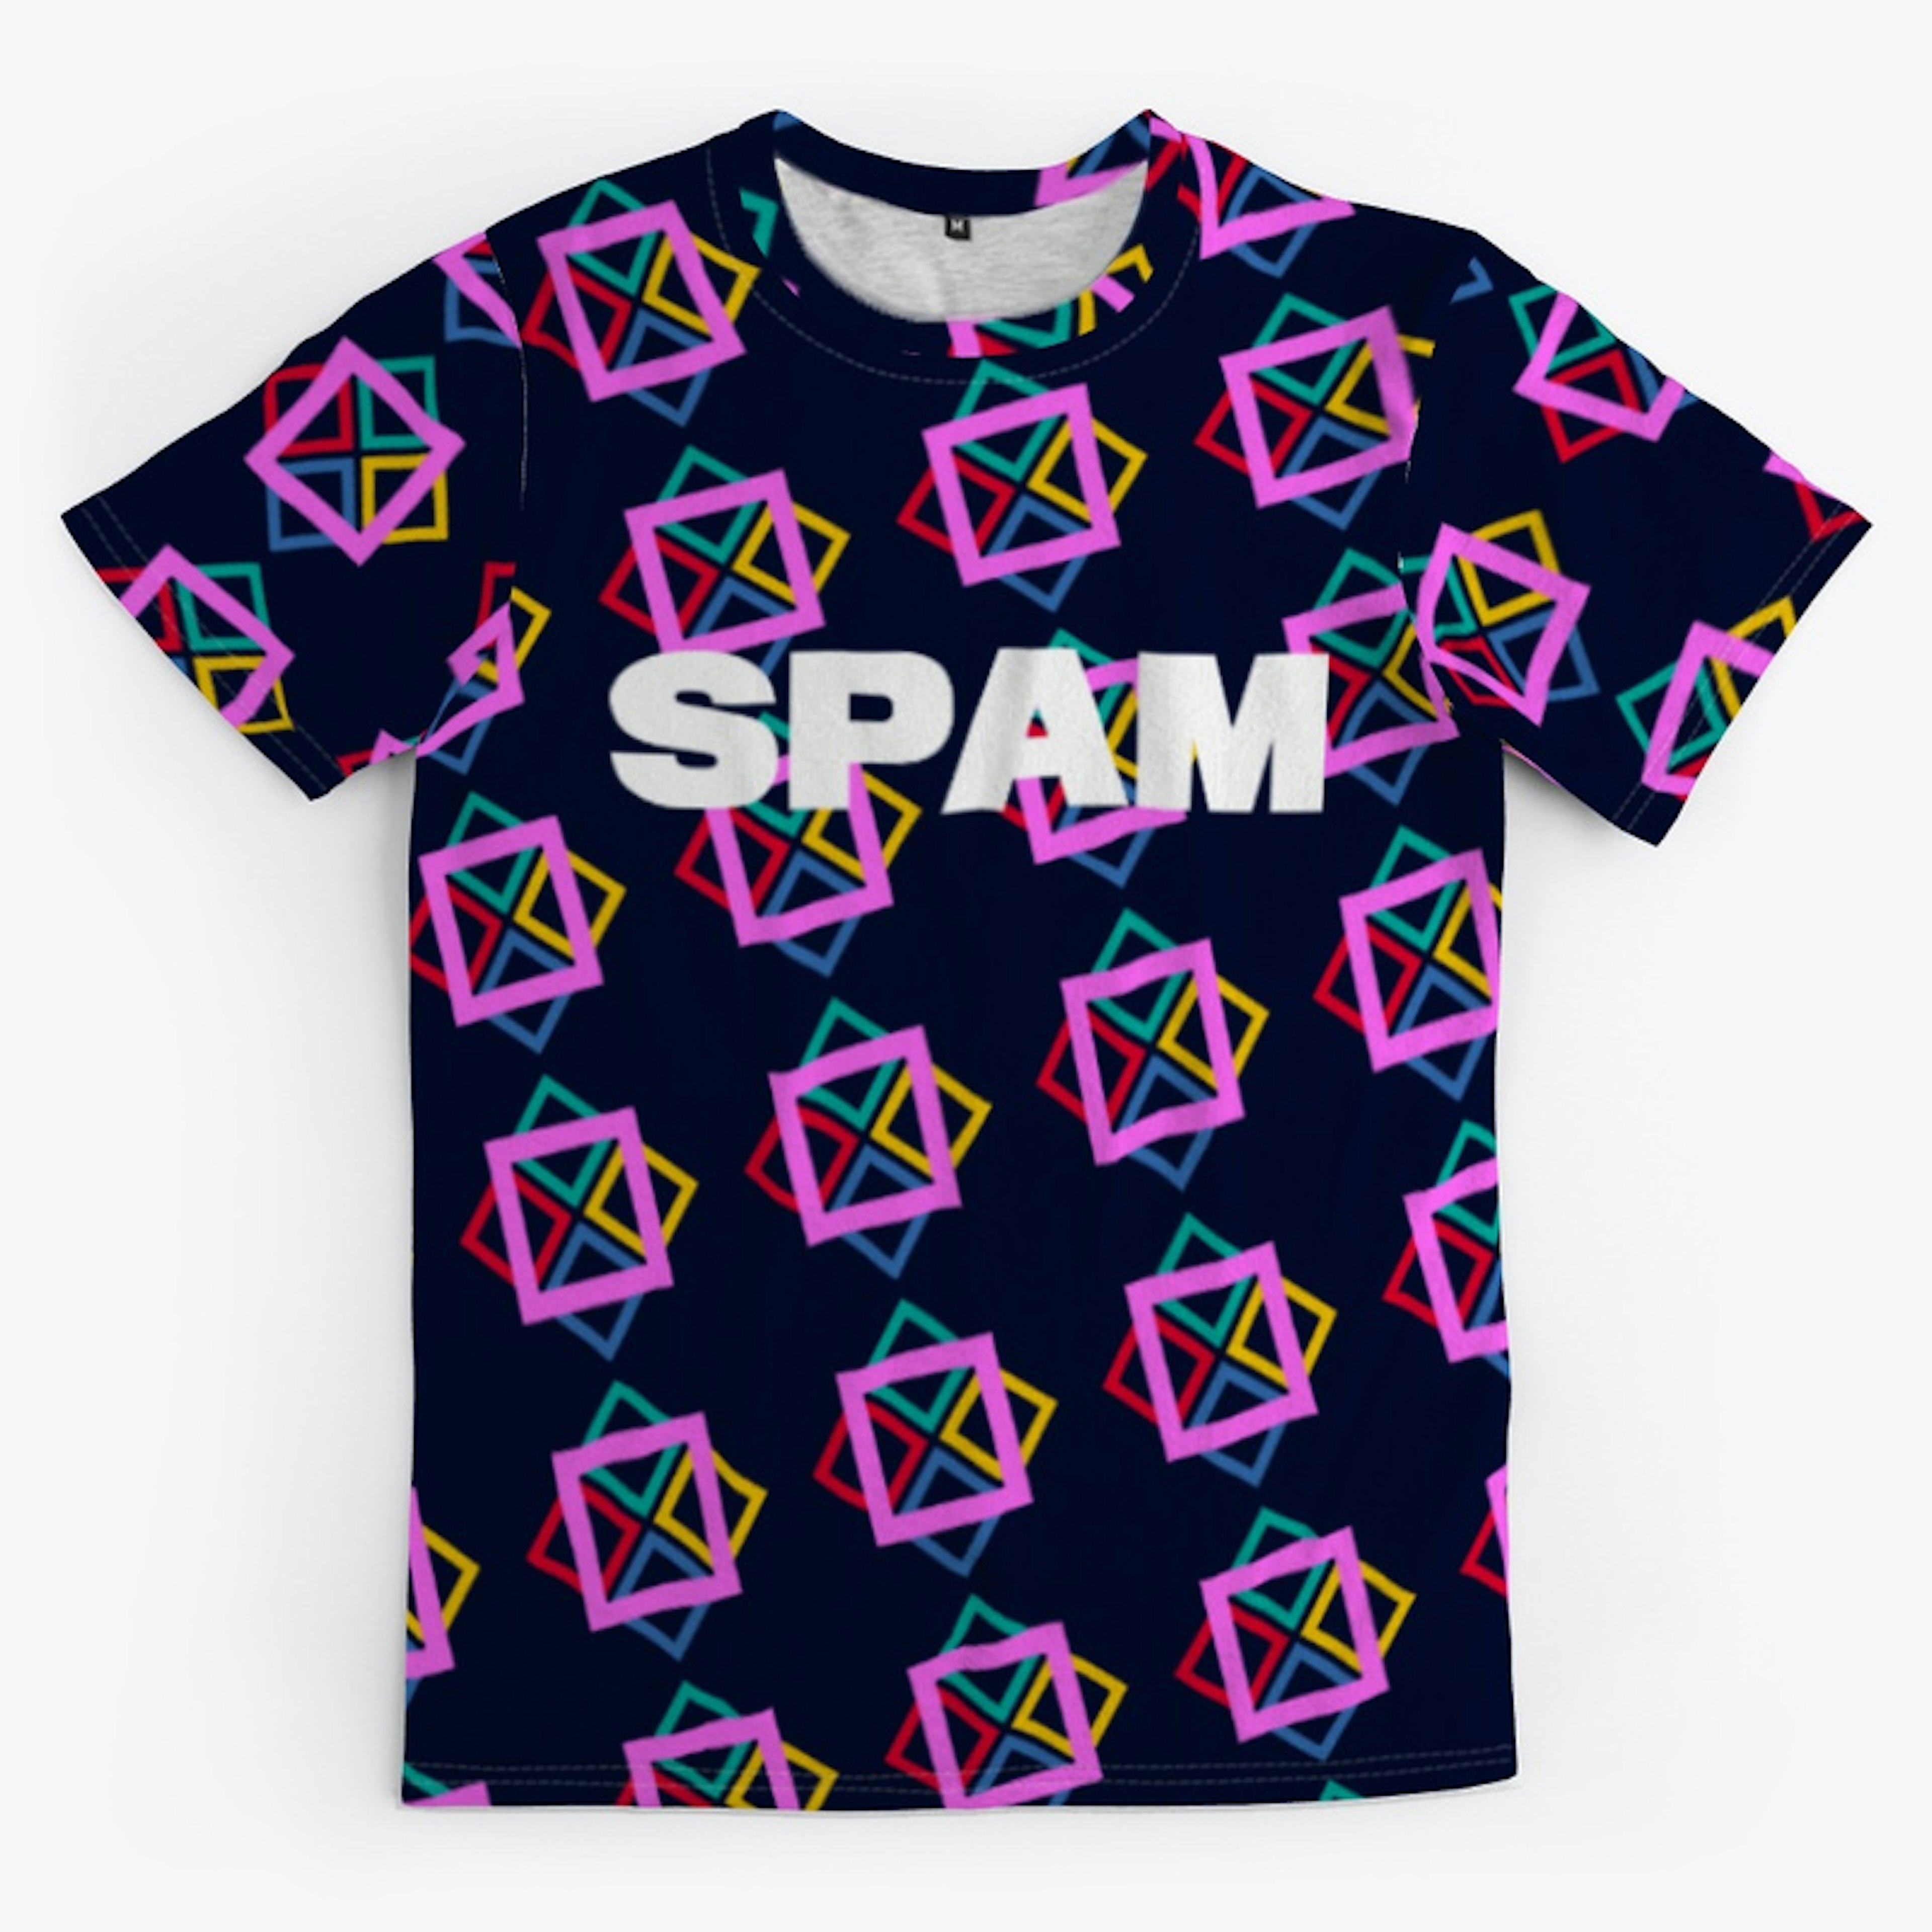 Spam Square Shirt